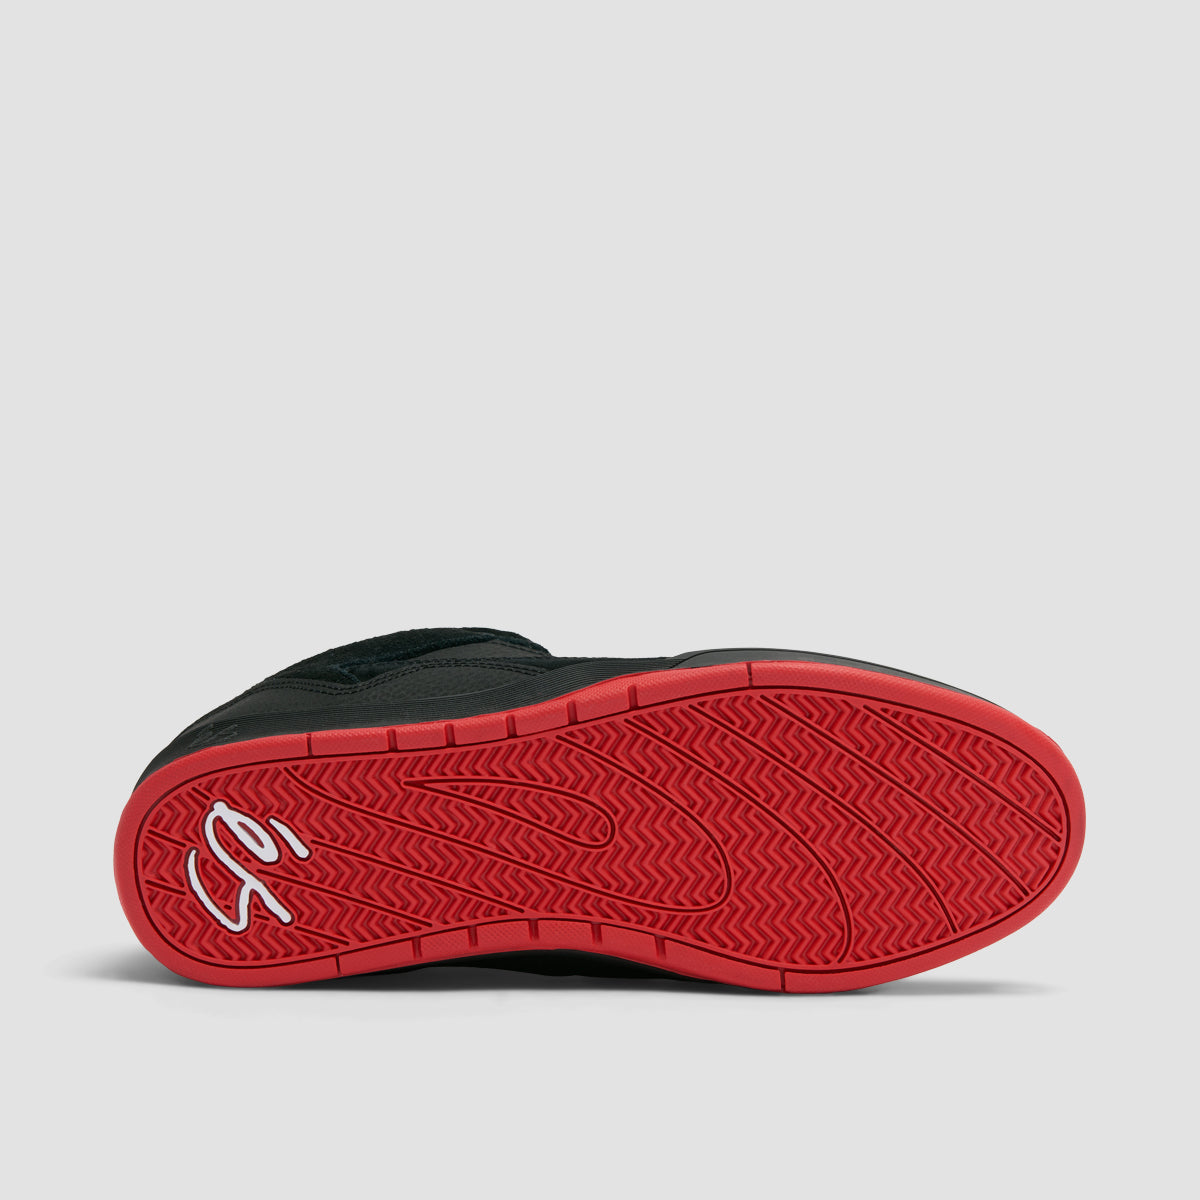 eS Stylus Mid X Wade Desarmo Shoes - Black/Red